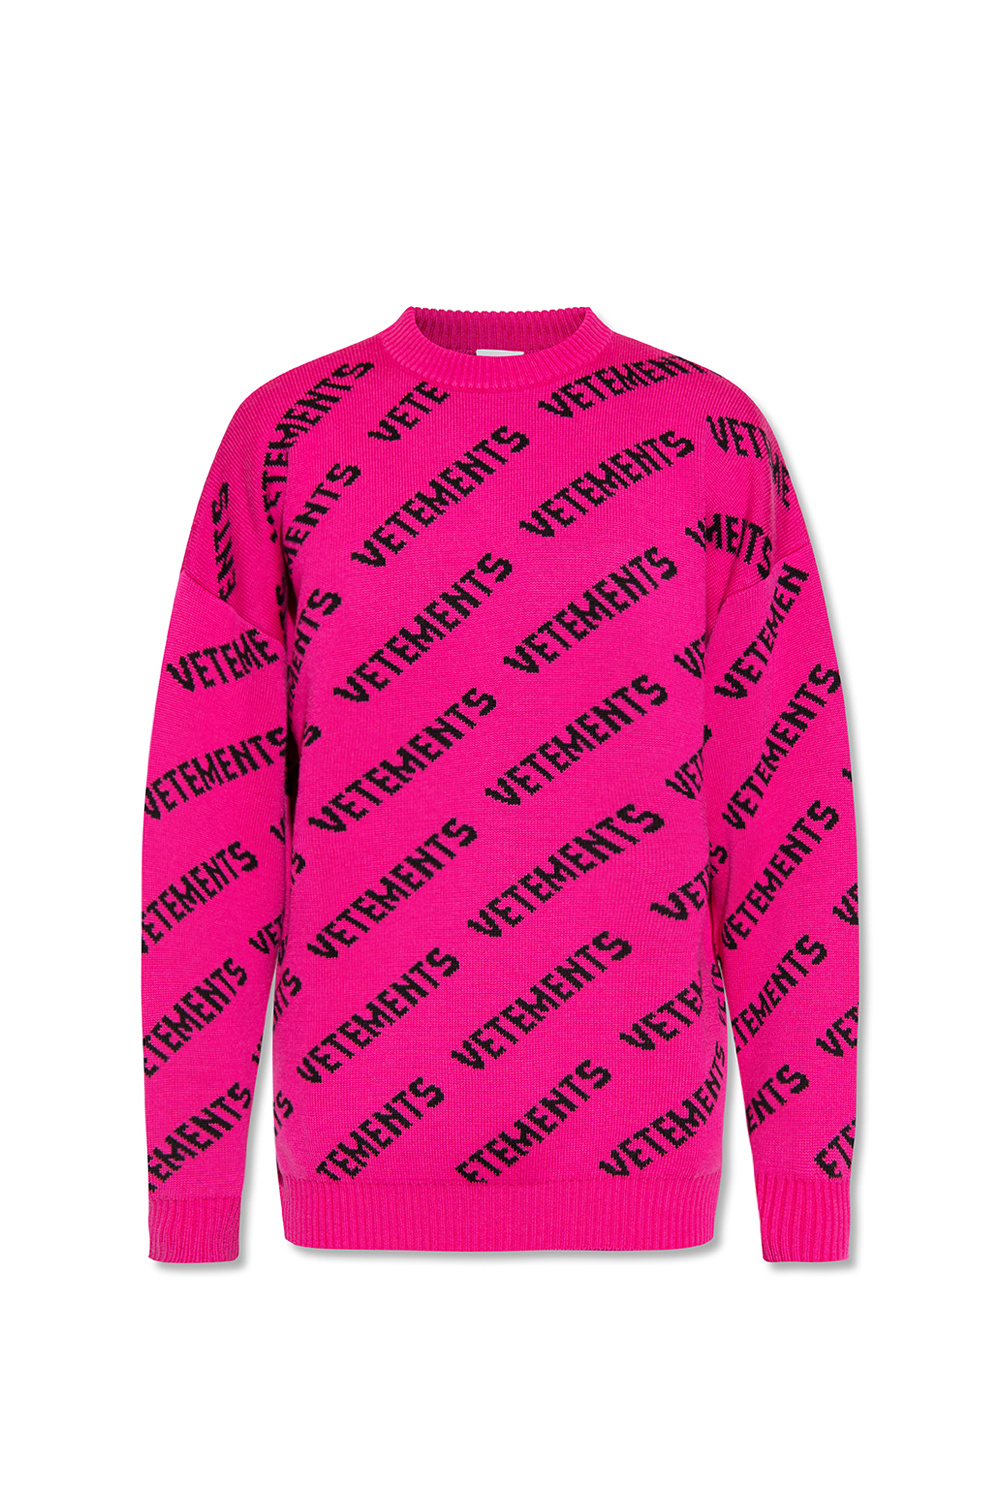 SchaferandweinerShops Sweden - Michael Kors embroidered-logo polo shirt -  Pink Sweater with monogram VETEMENTS